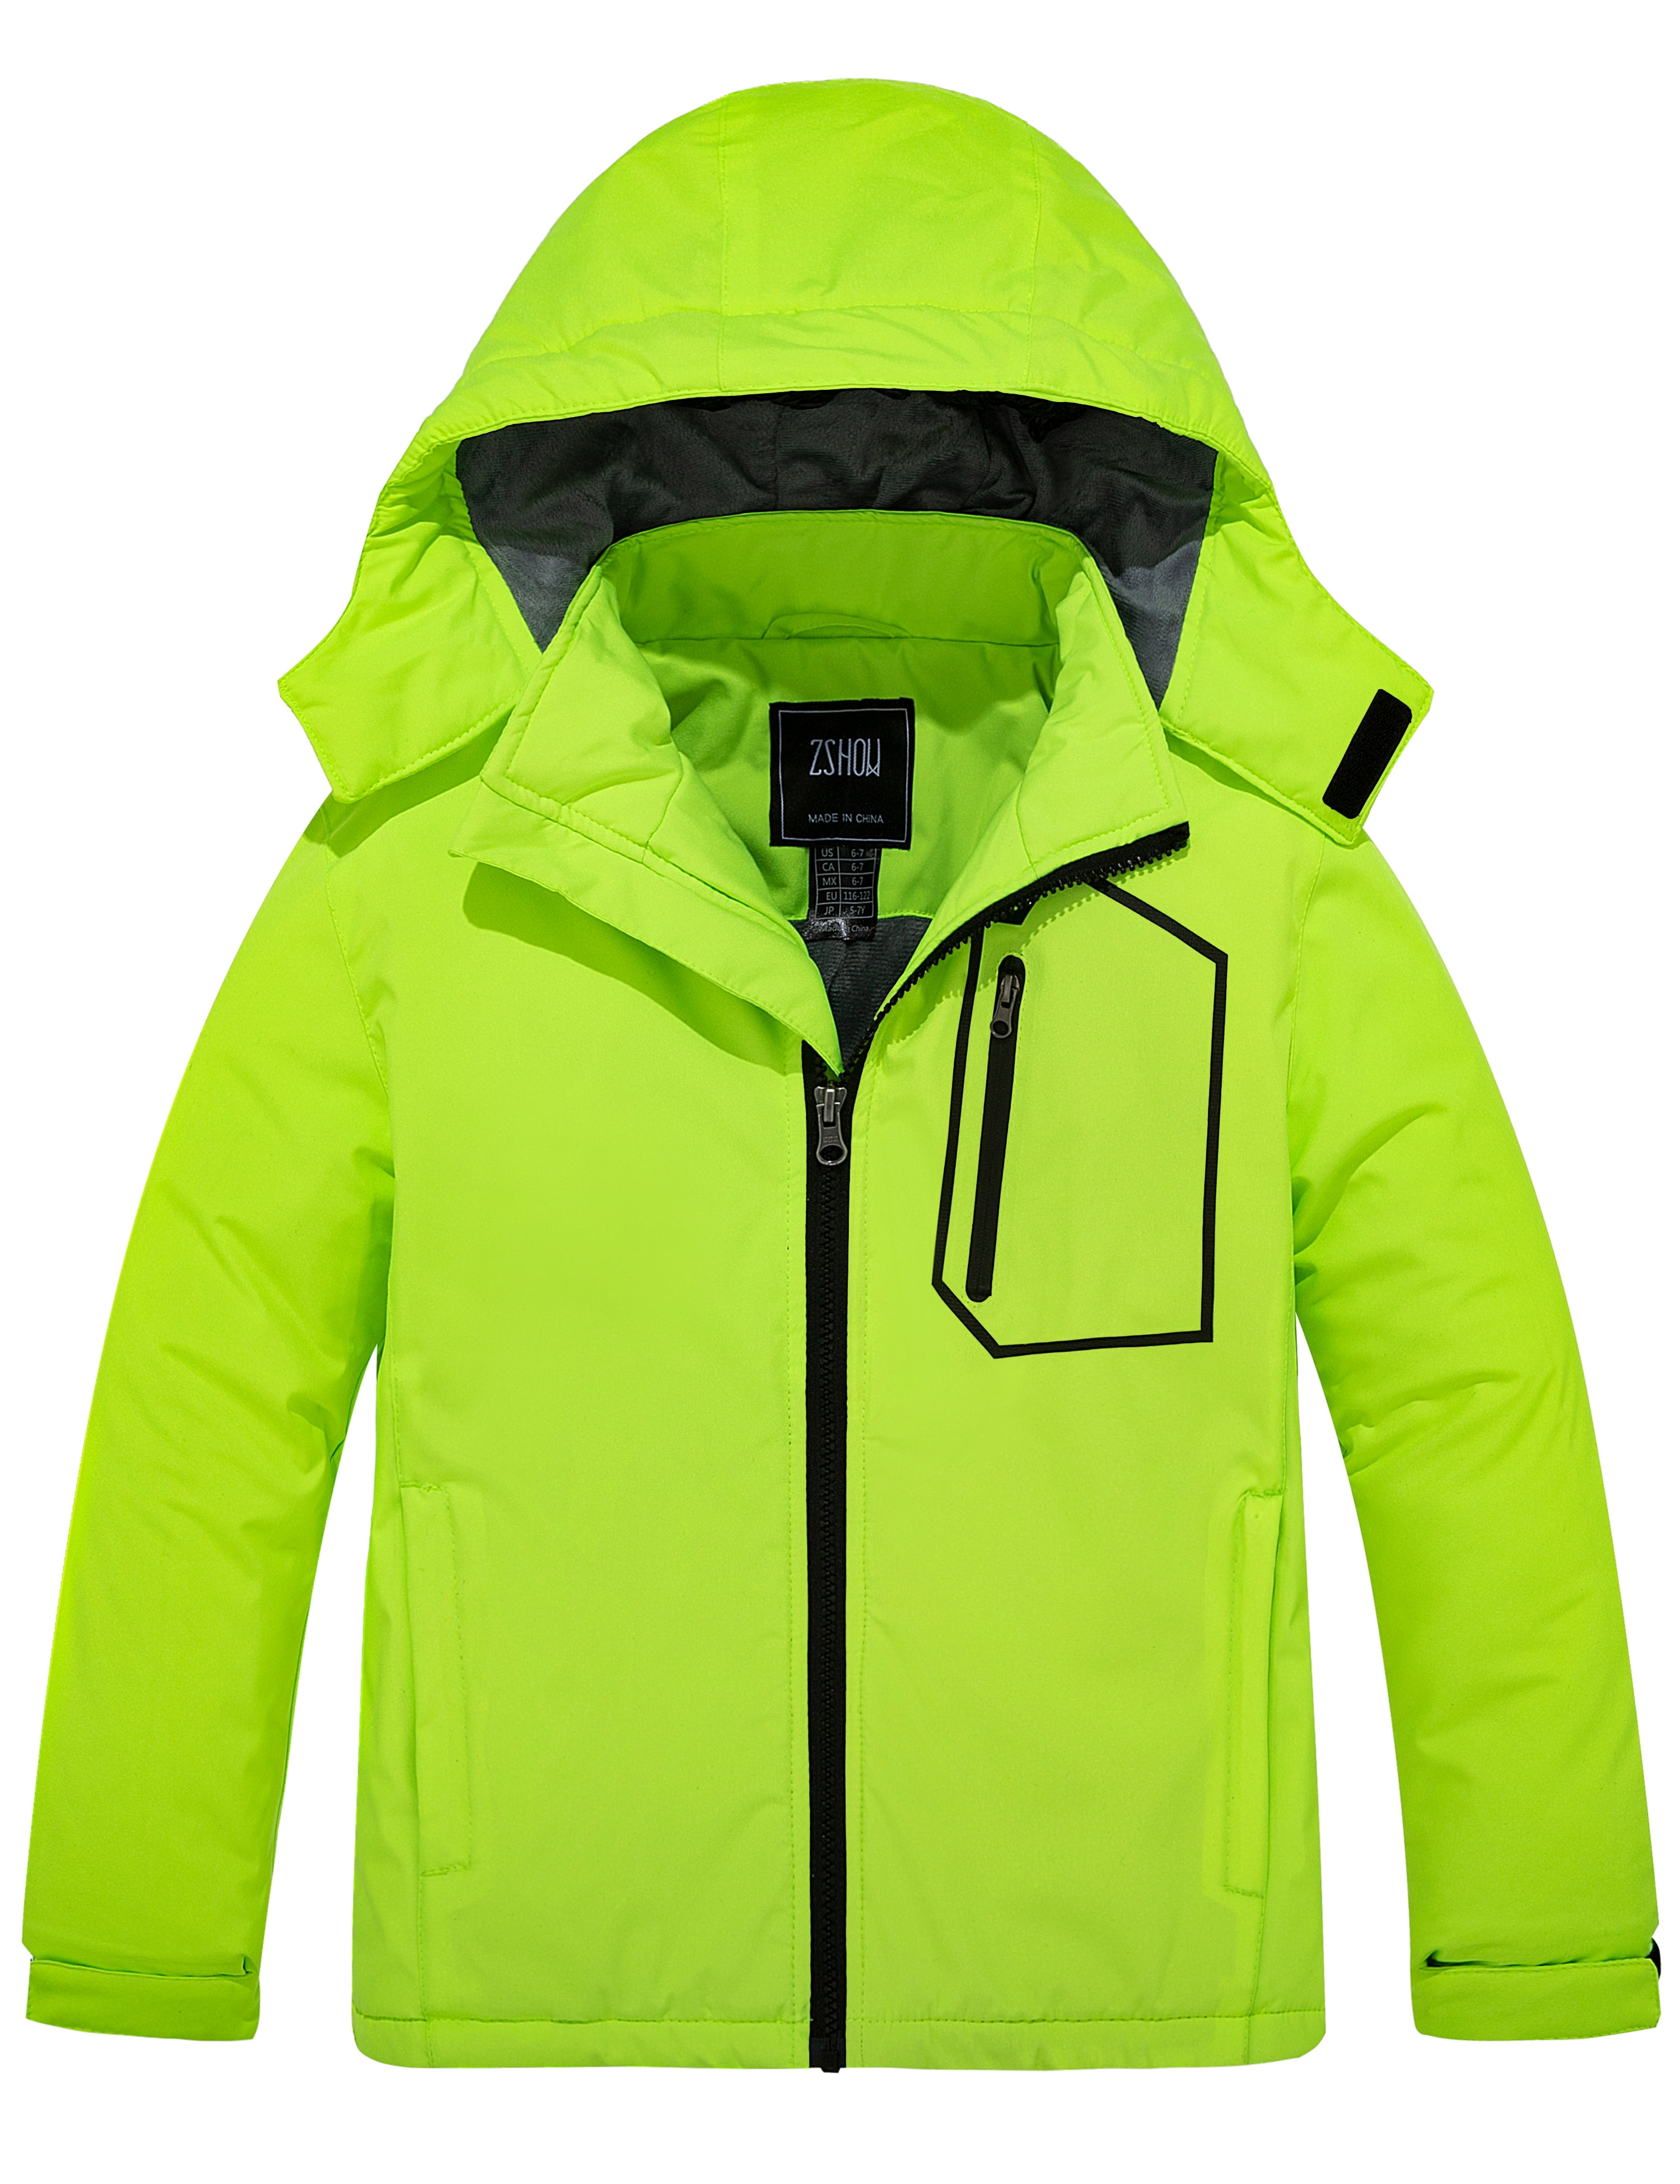 ZSHOW Boys Waterproof Ski Jacket Windbproof Thick Winter Parka Coat with Detachable Hood 